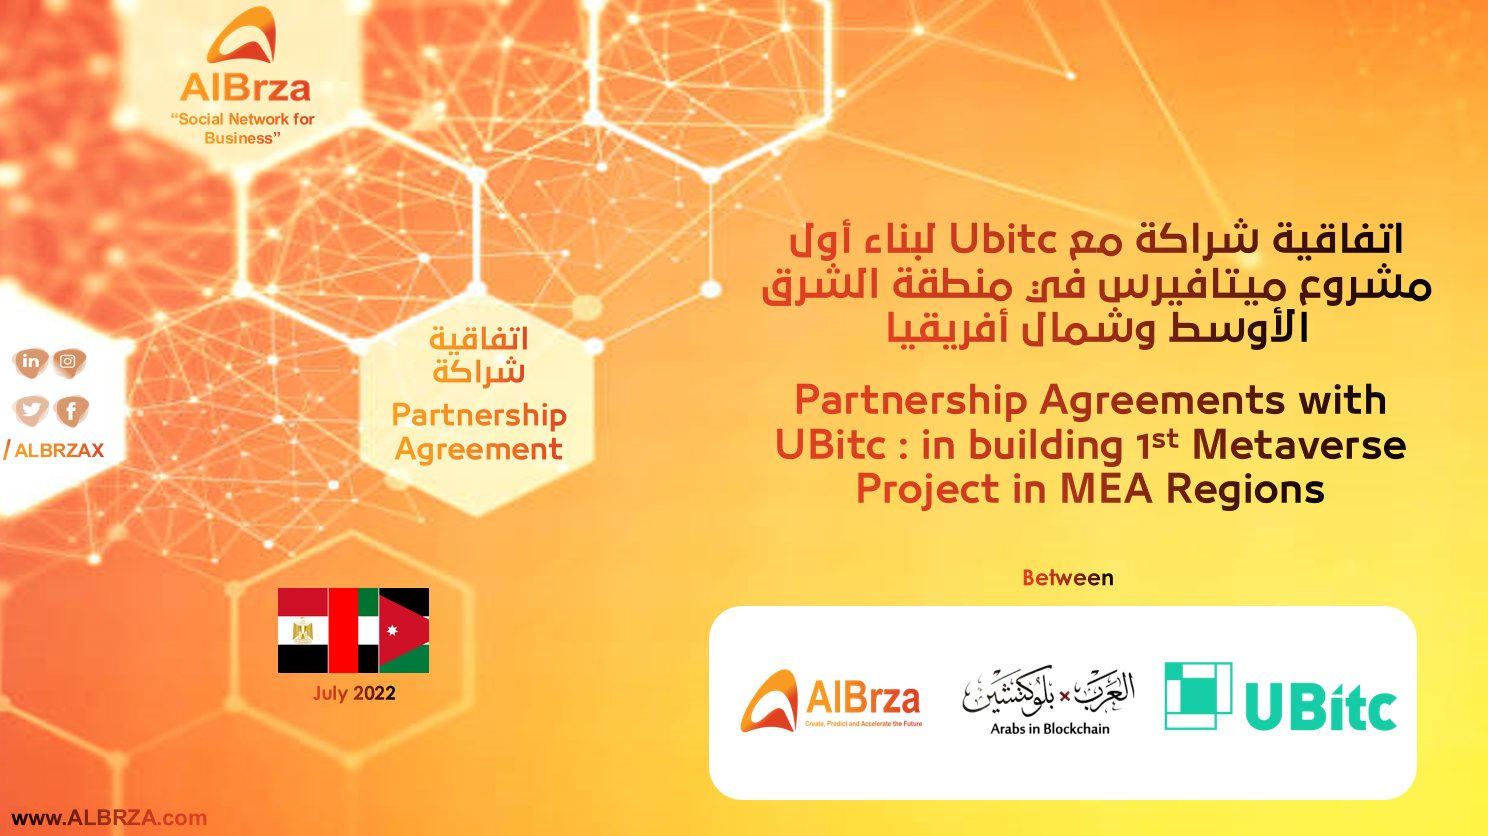 Partnership Agreements with UBitc in building 1st Metaverse Project in MEA Regions - اتفاقية شراكة لبناء أول مشروع ميتافيرس في منطقة الشرق الأوسط وشمال أفريقيا